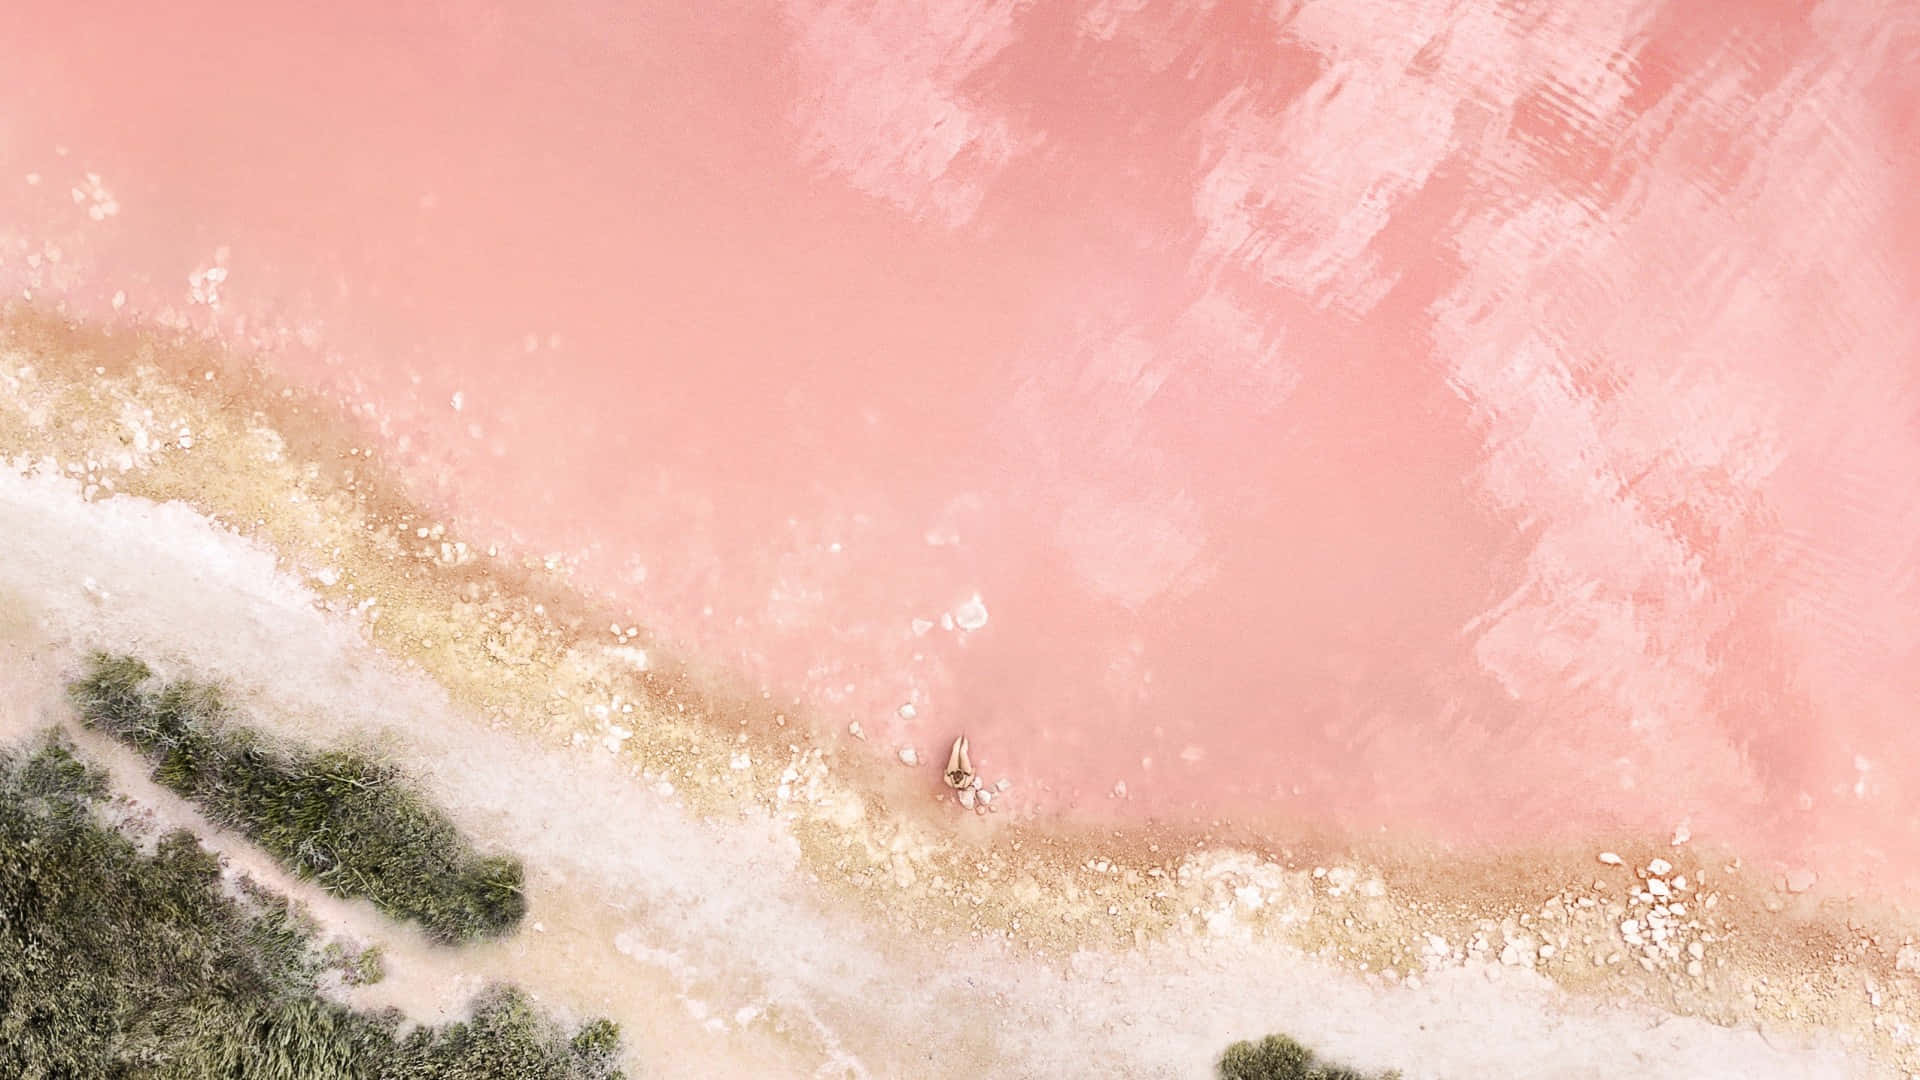 Unwind at the stunning Pink Sand Beach Wallpaper